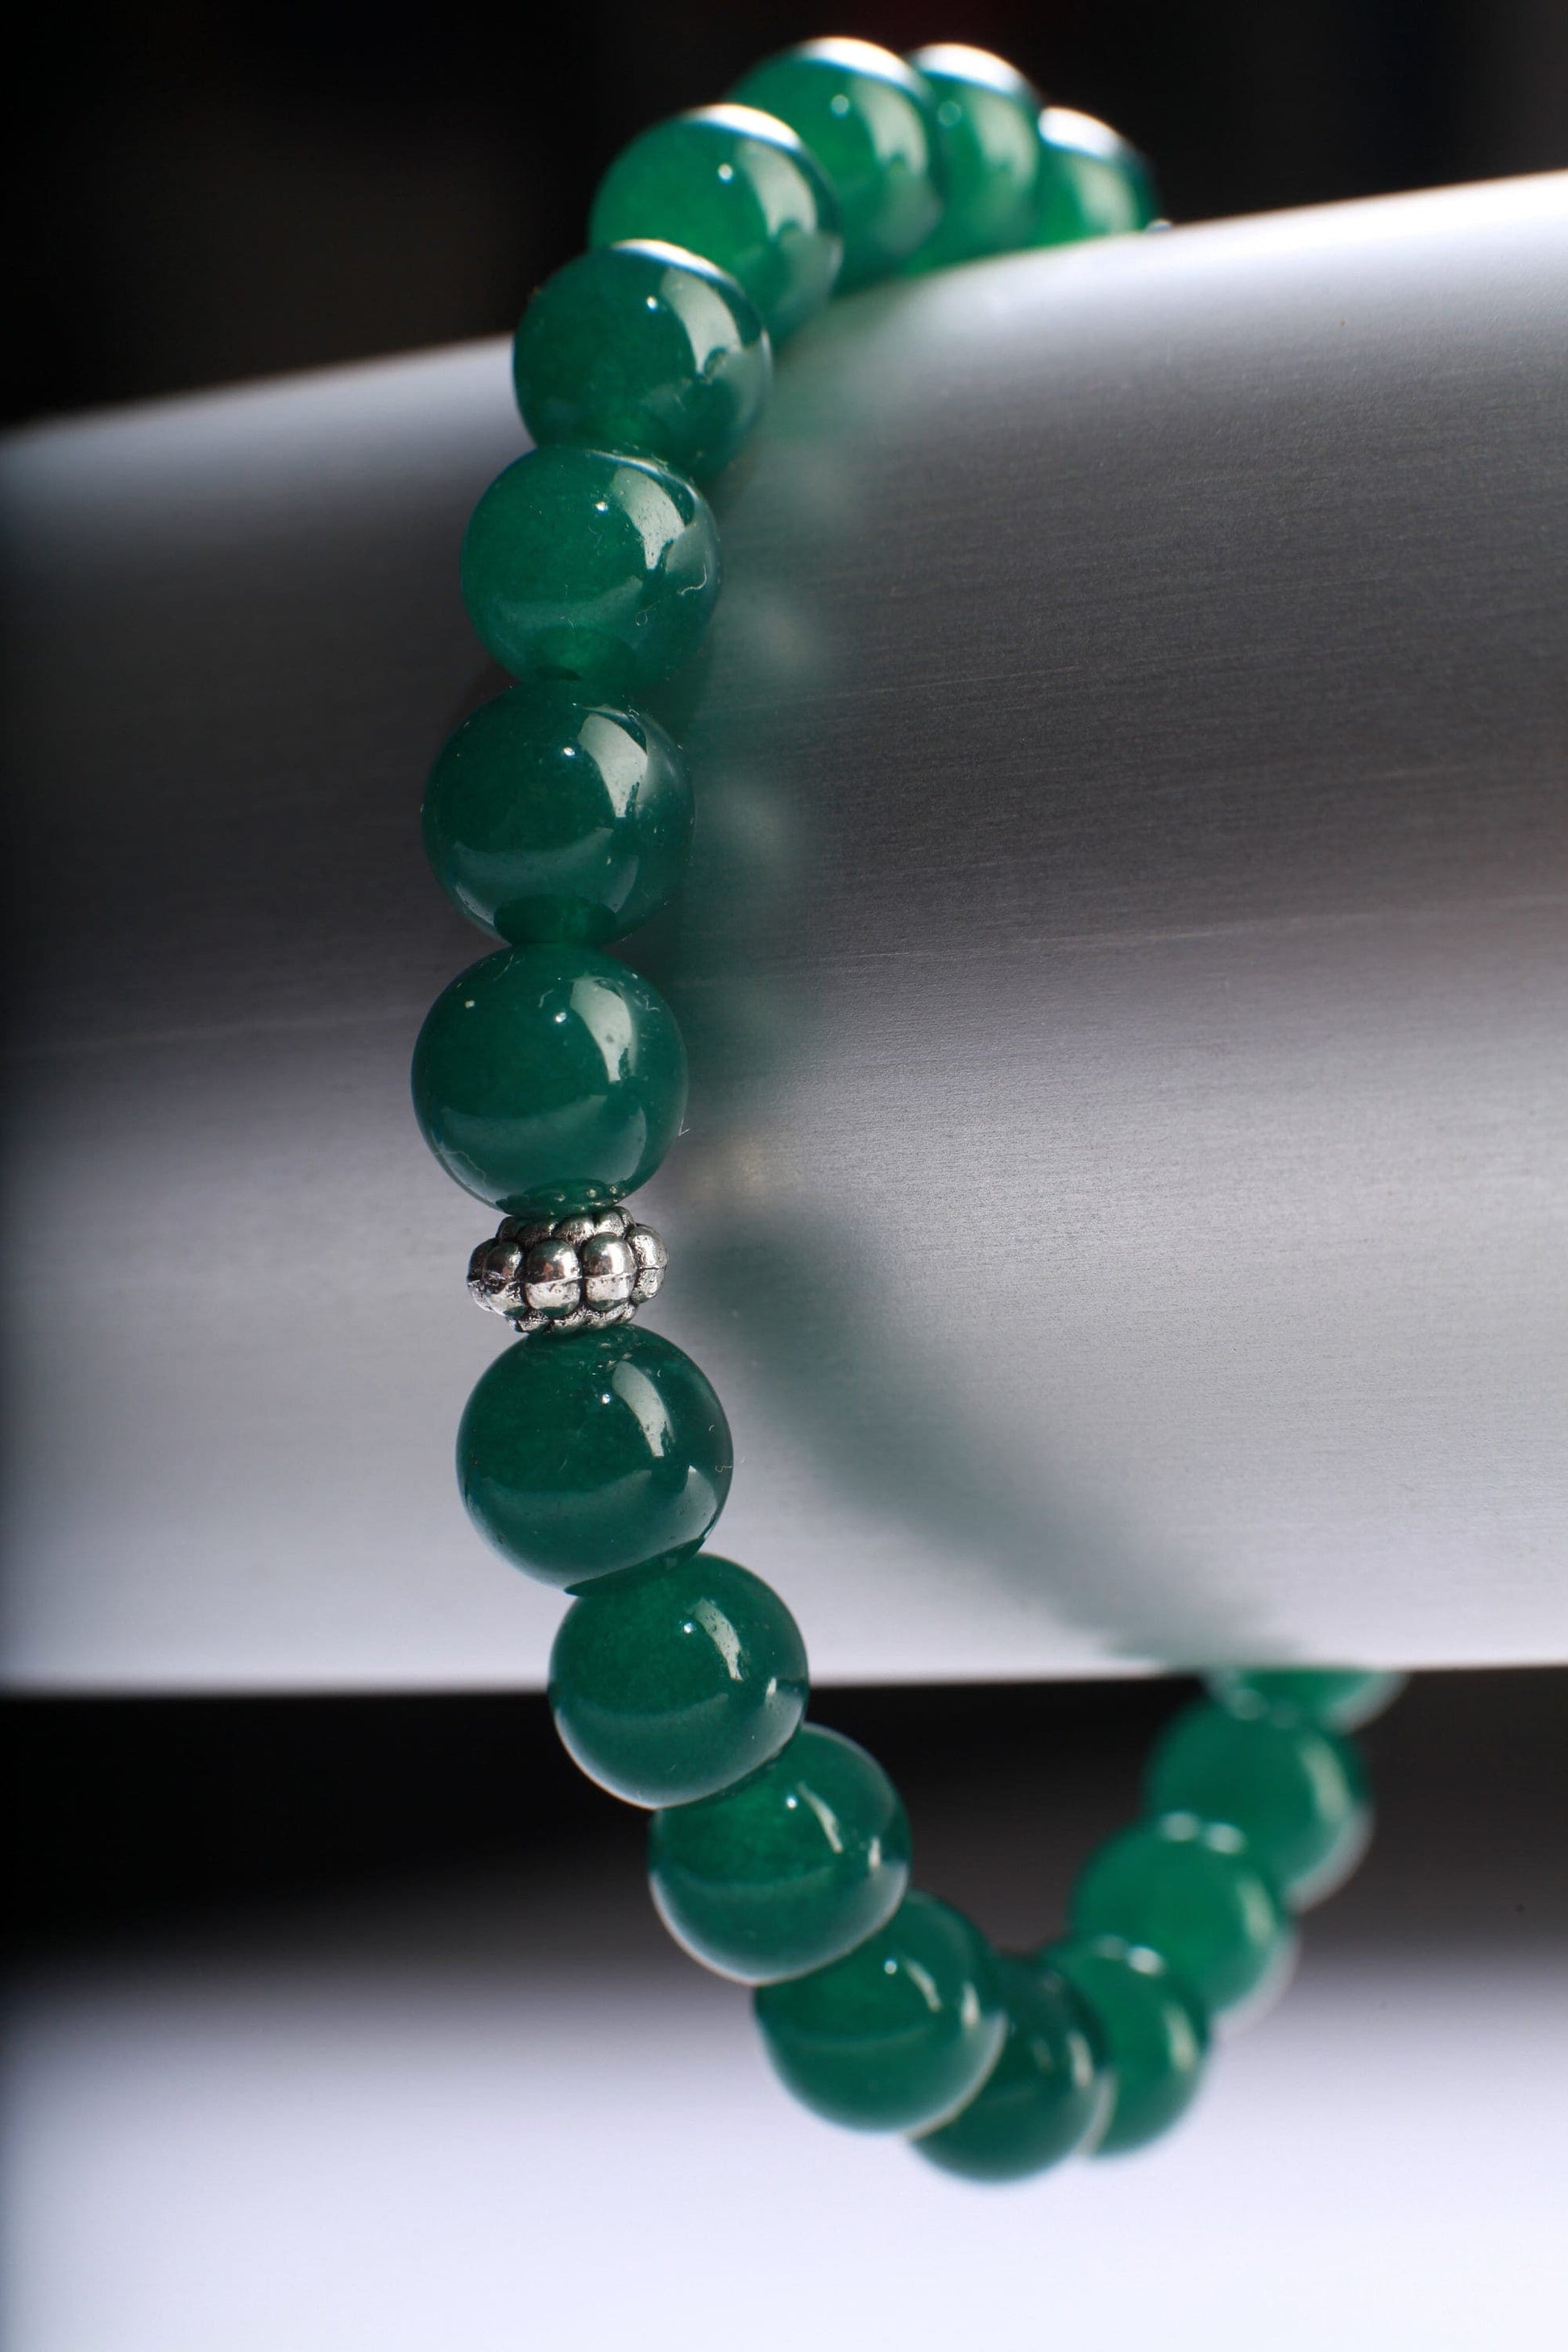 Green Onyx Natural Gemstone 8mm Stretchy Bracelet 6-9.5&quot;, emerald green healing crystal gems.